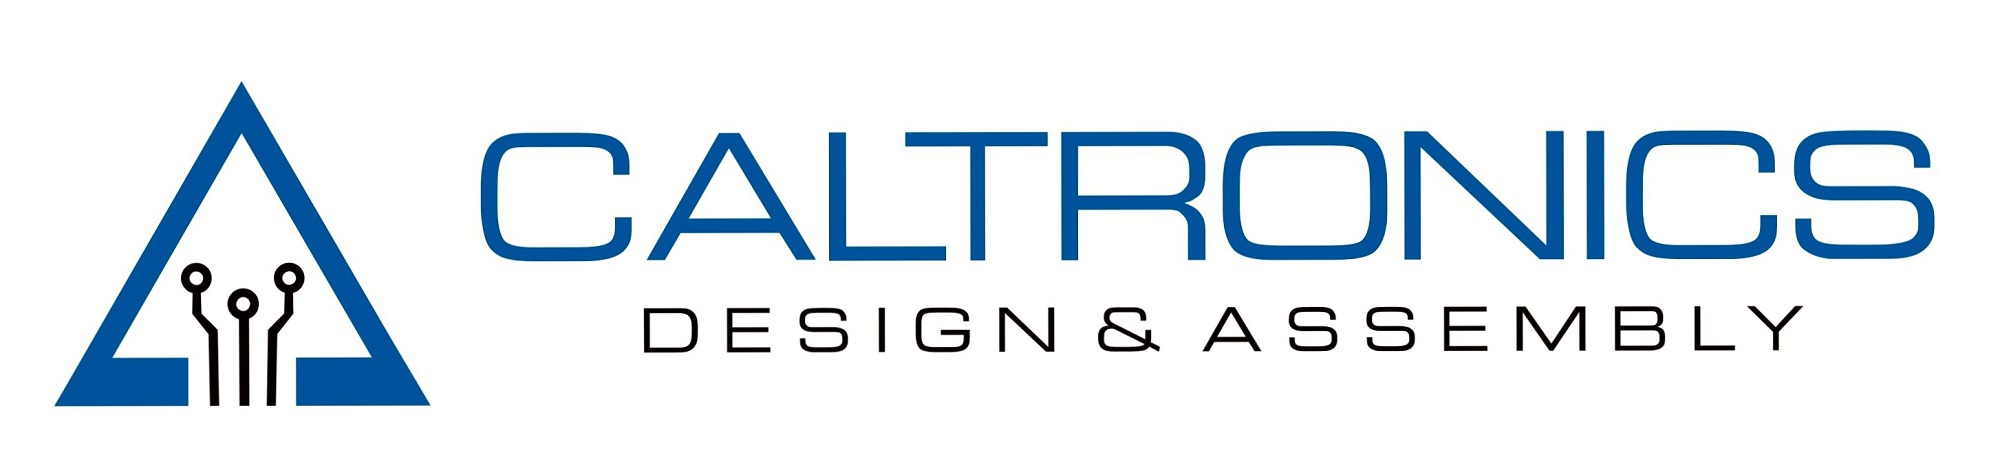 Caltronics Design and Assembly, Inc. Logo